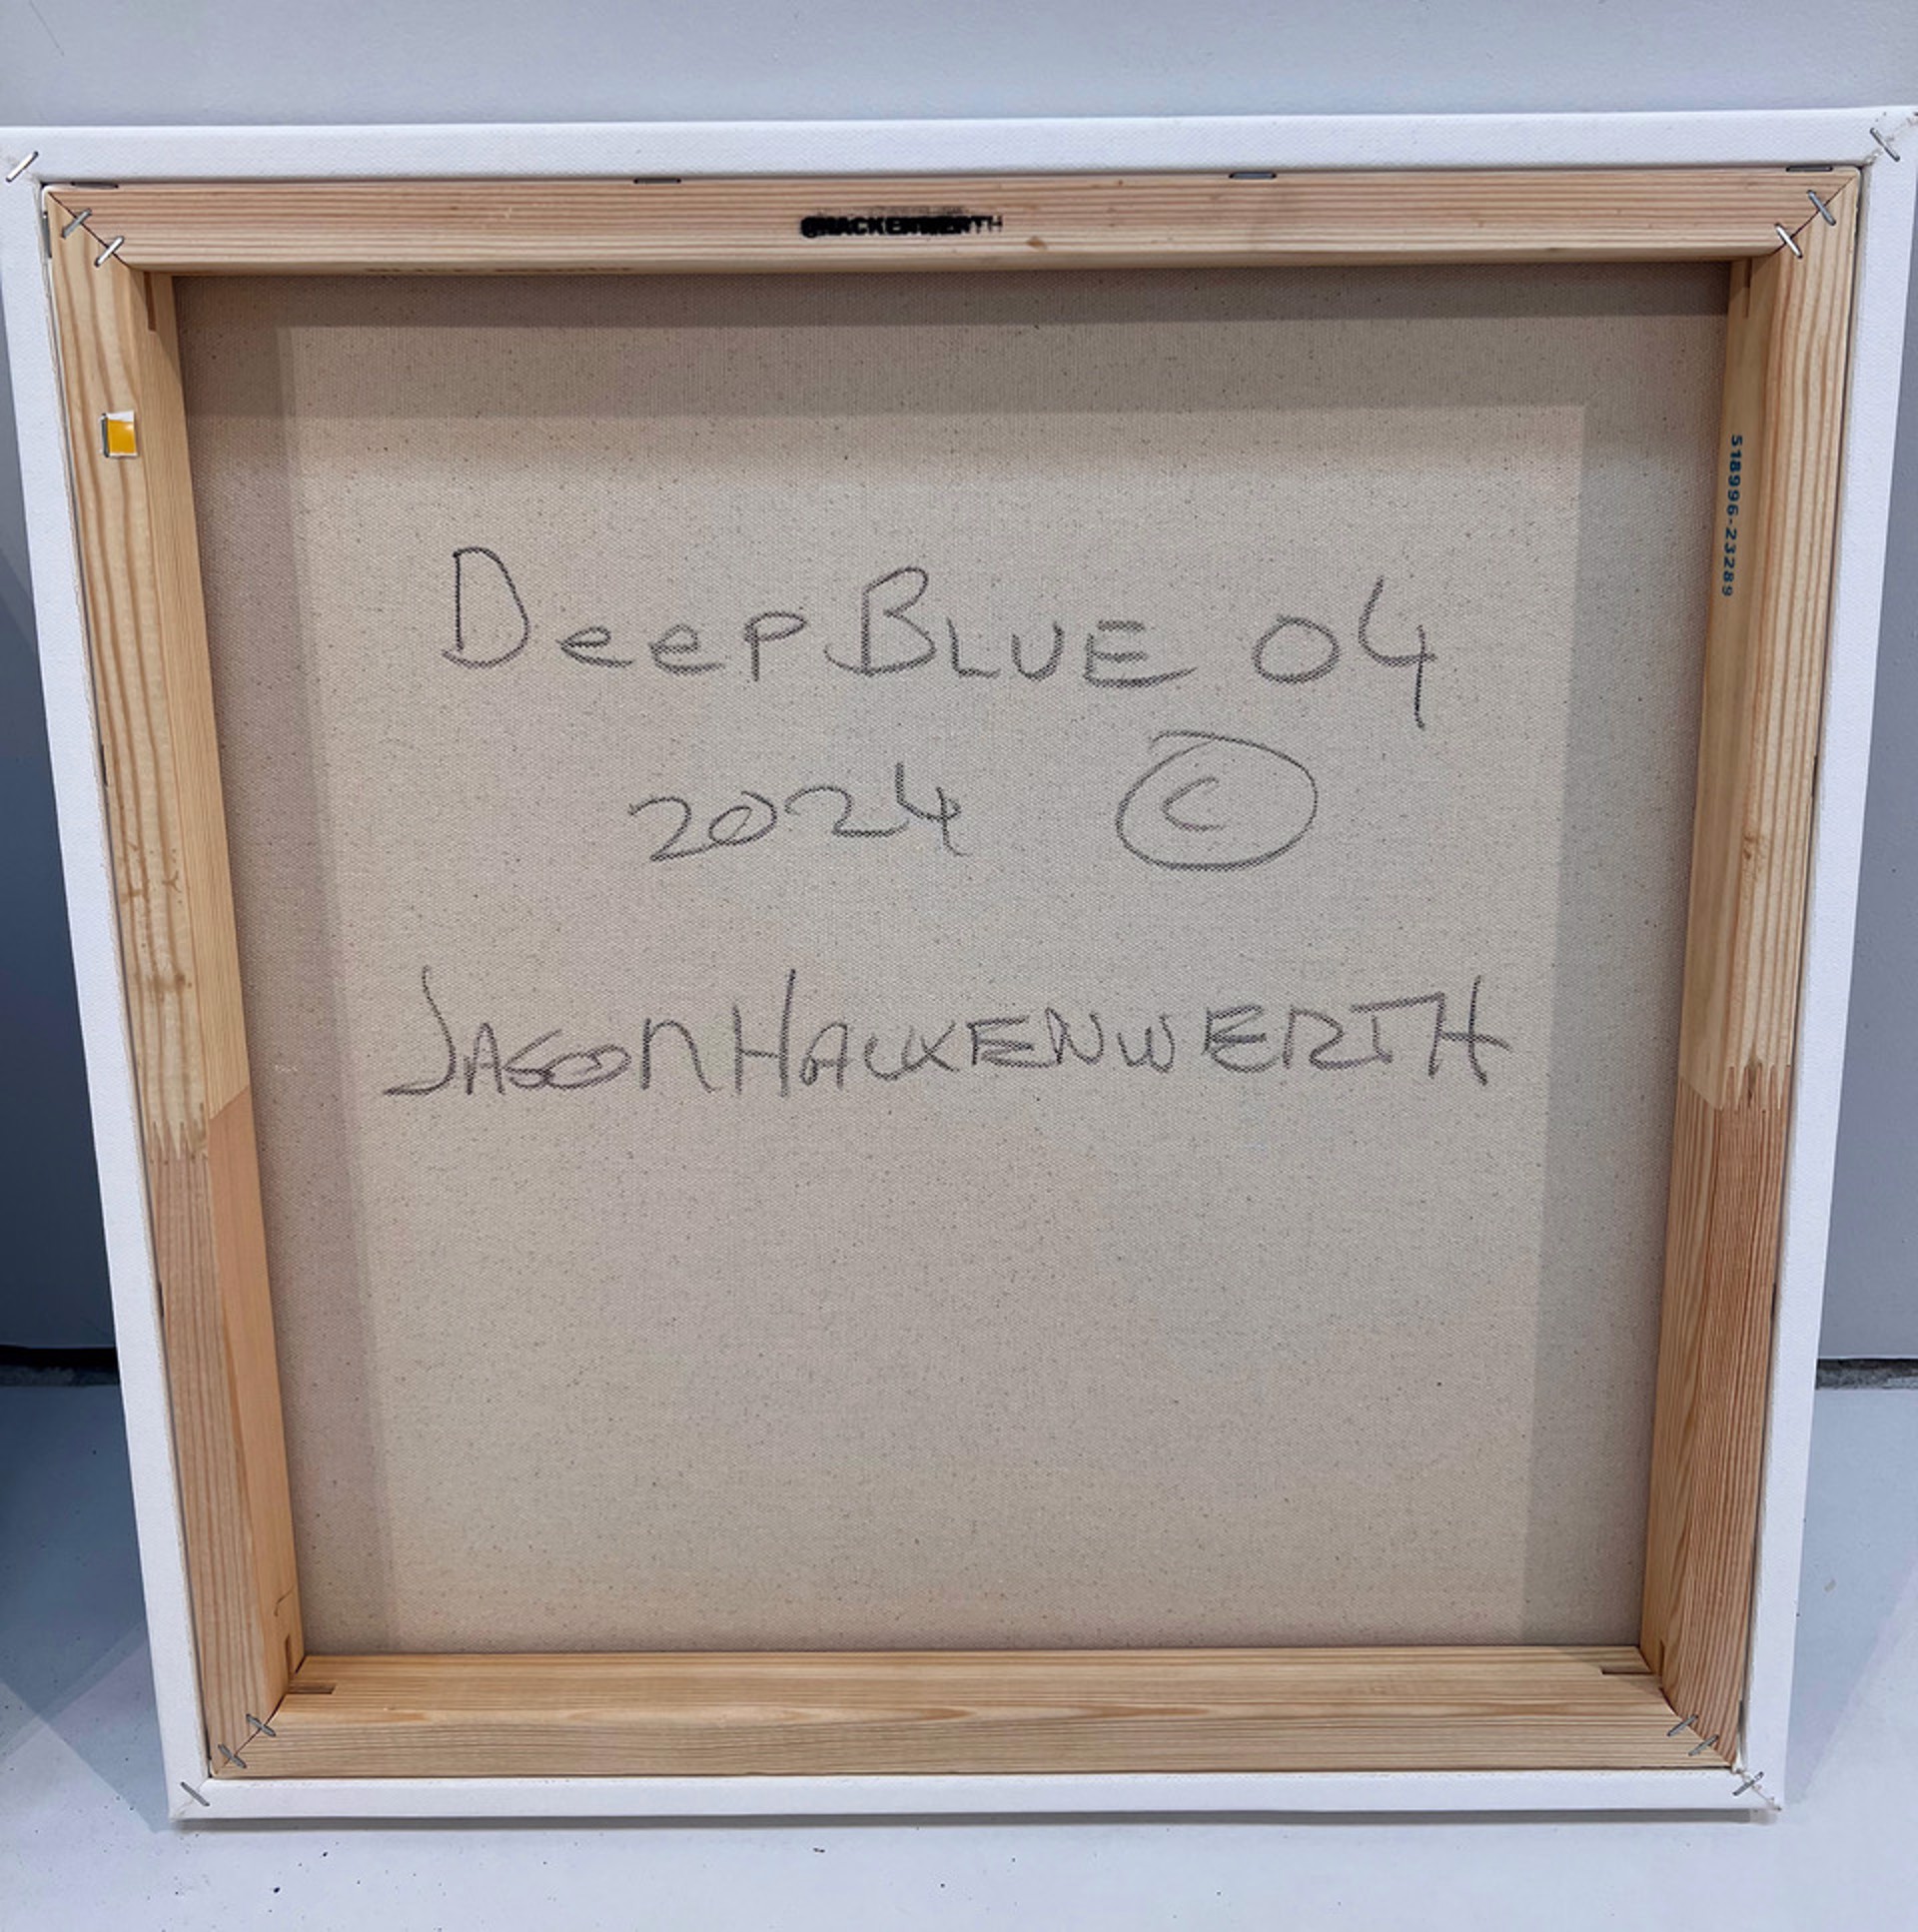 Deep Blue IV by Jason Hackenwerth